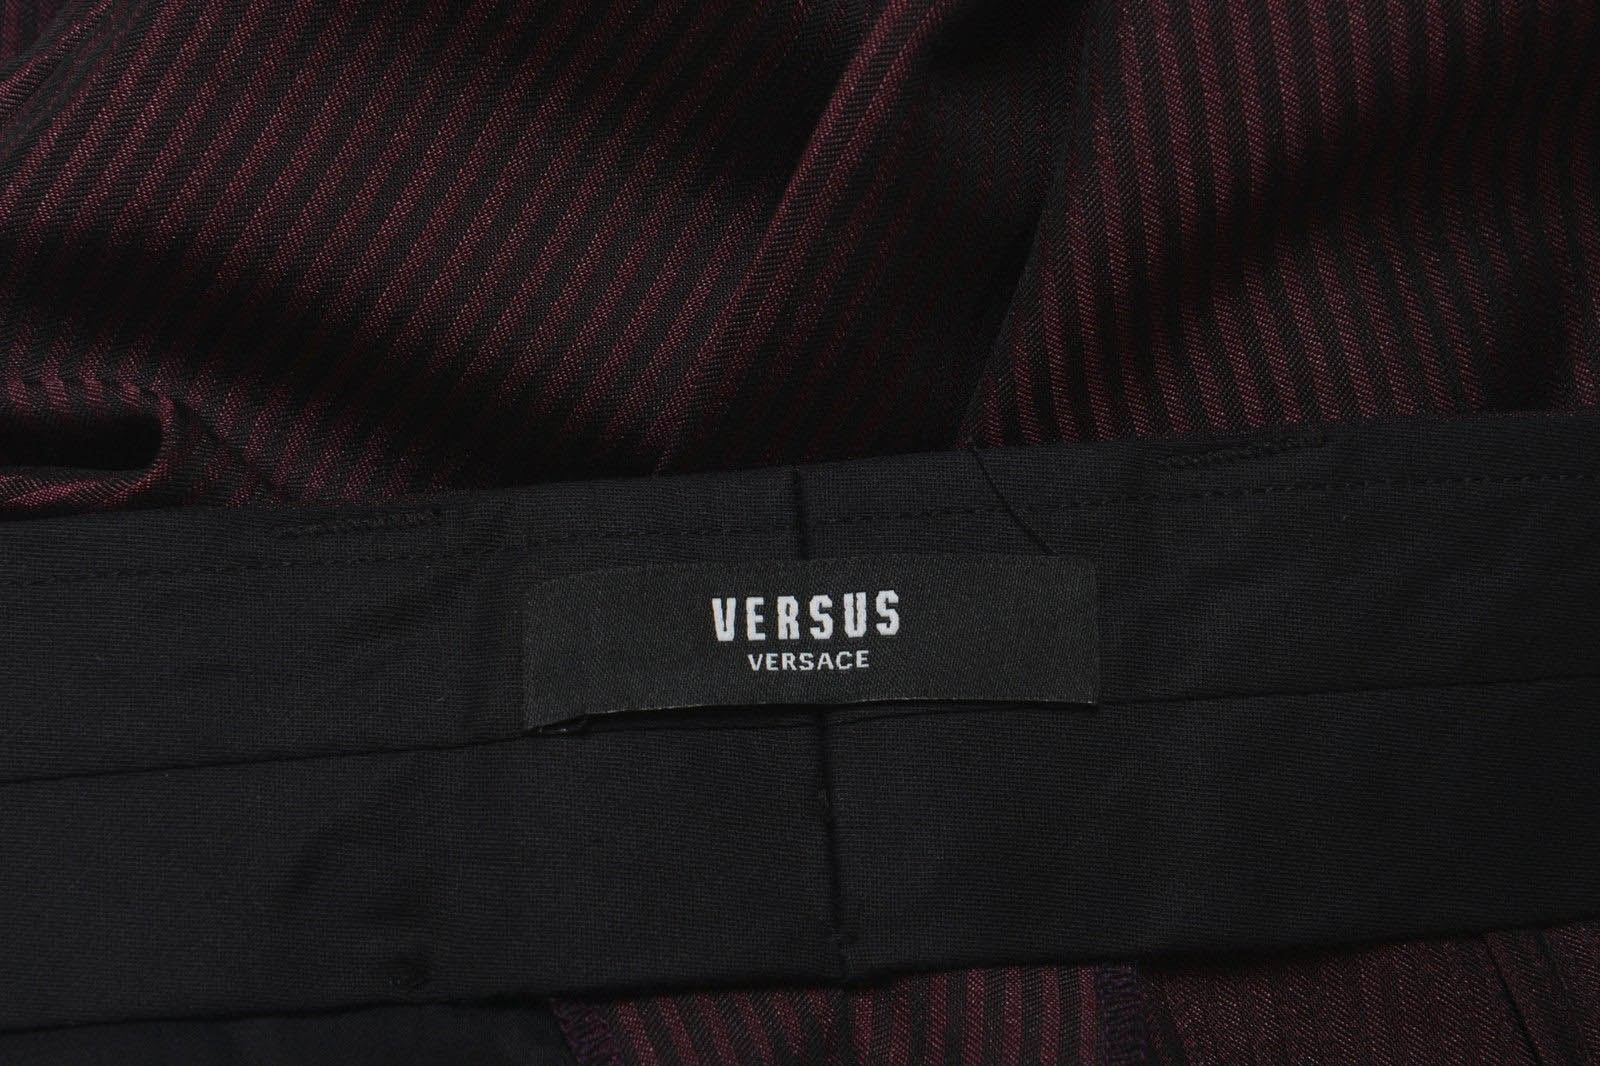 Versace Versus Men's Wool Striped Pleated Dress Pants Size 30 32 34 36 38 